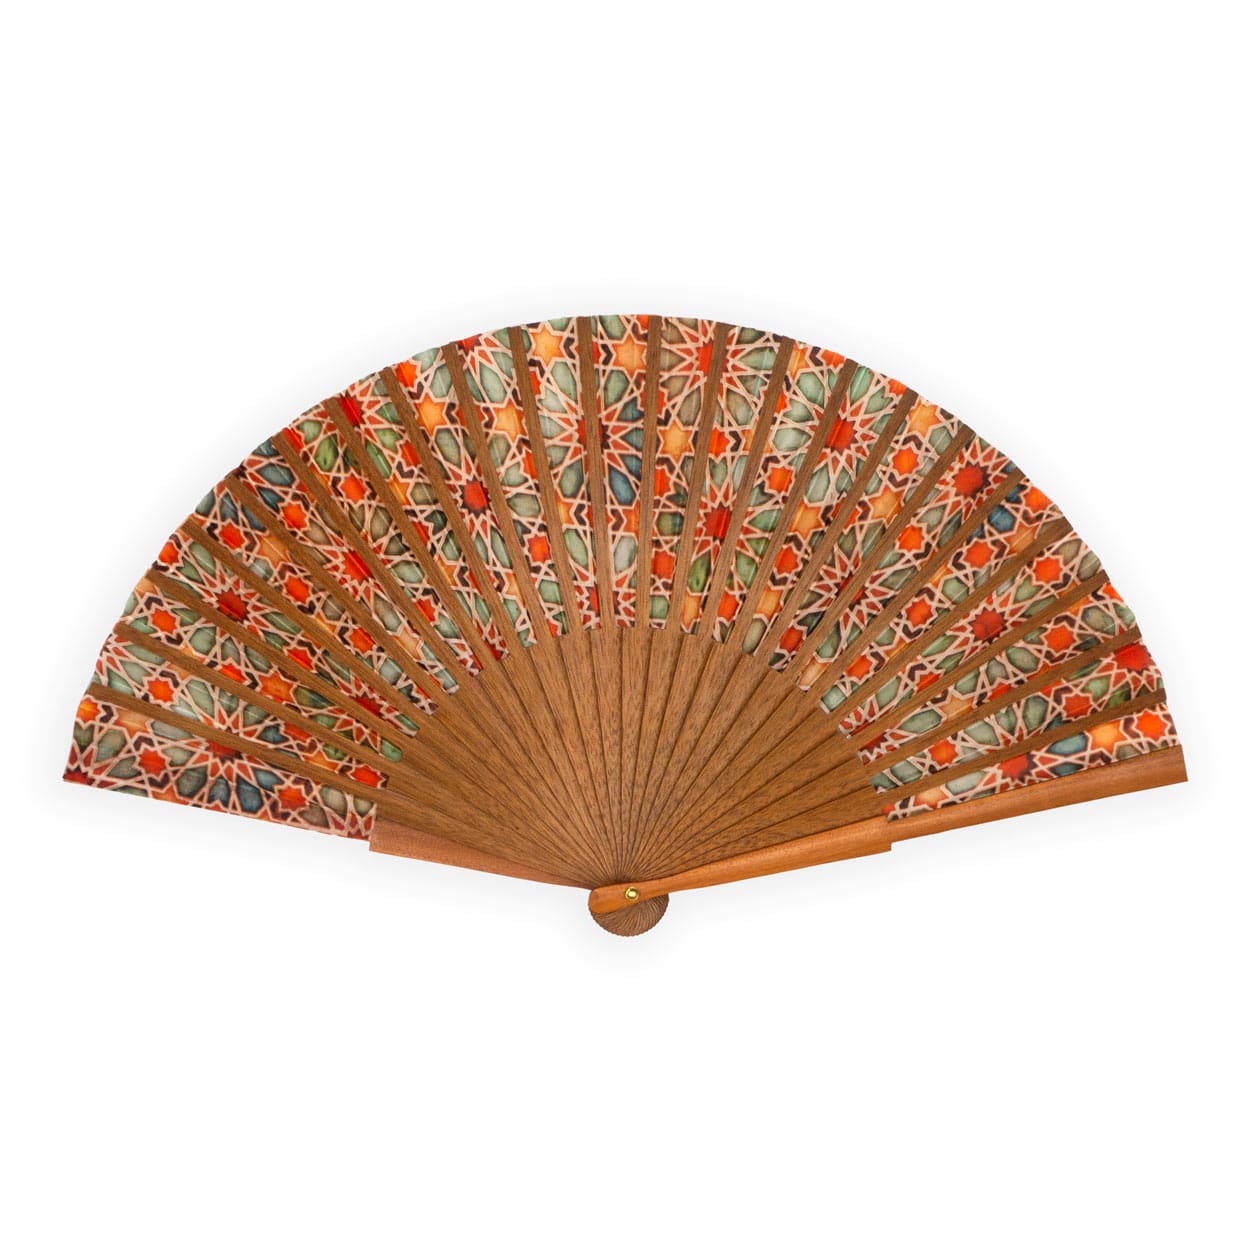 Orange silk folding fan inspired by Andalusian tiles